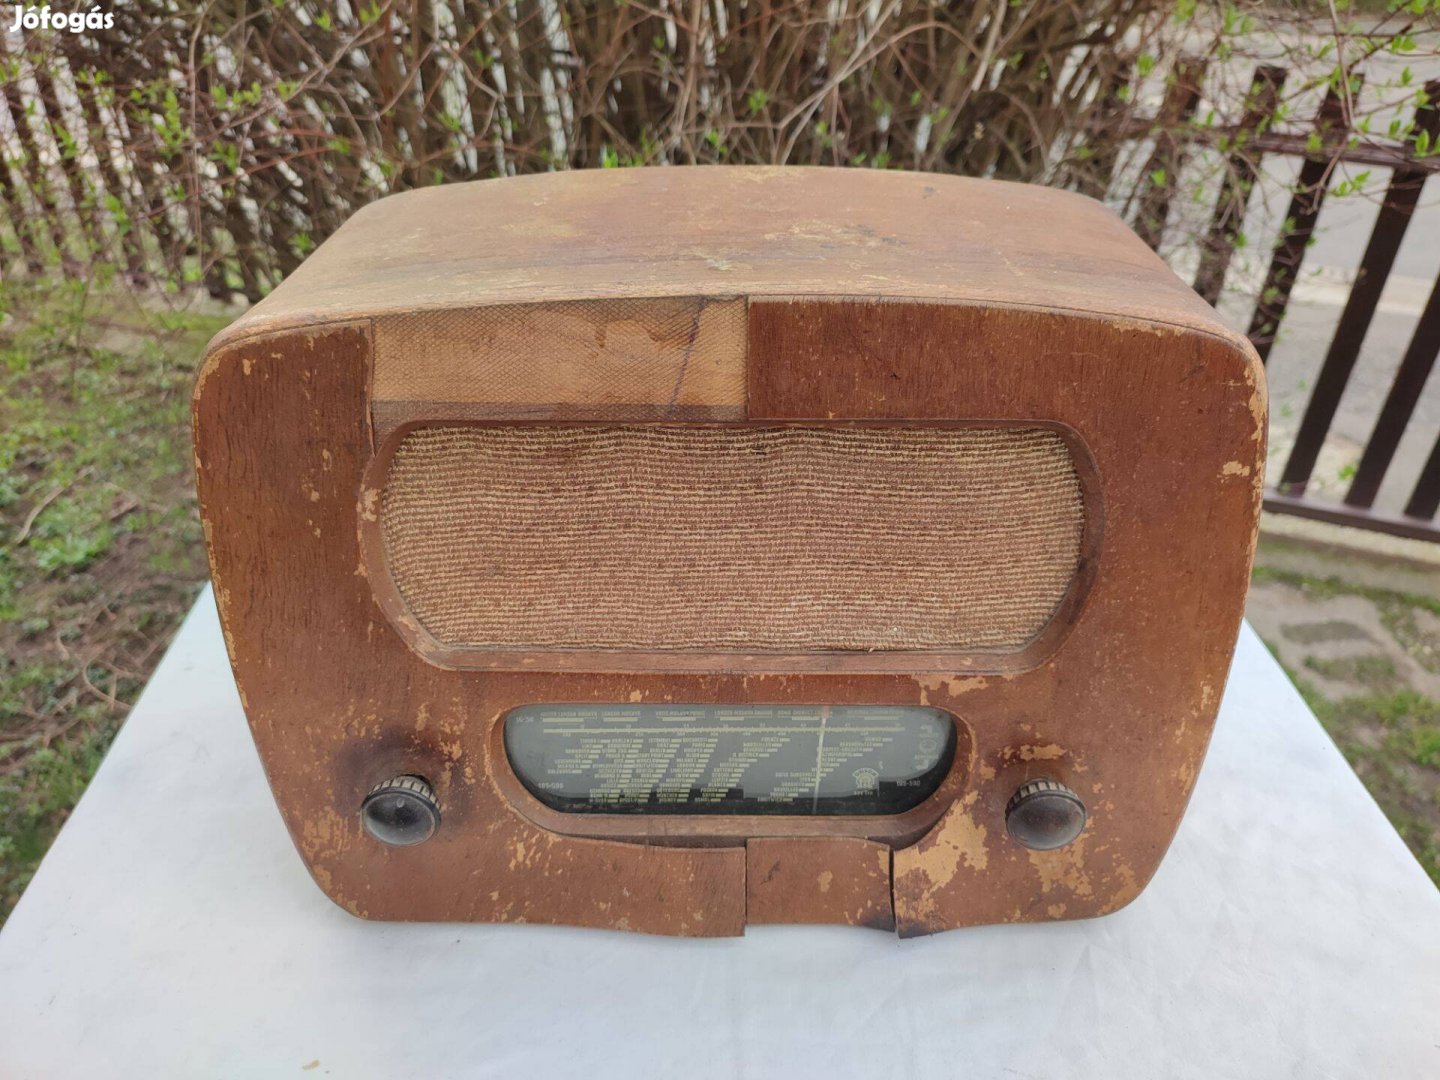 Orion 325 régi rádió